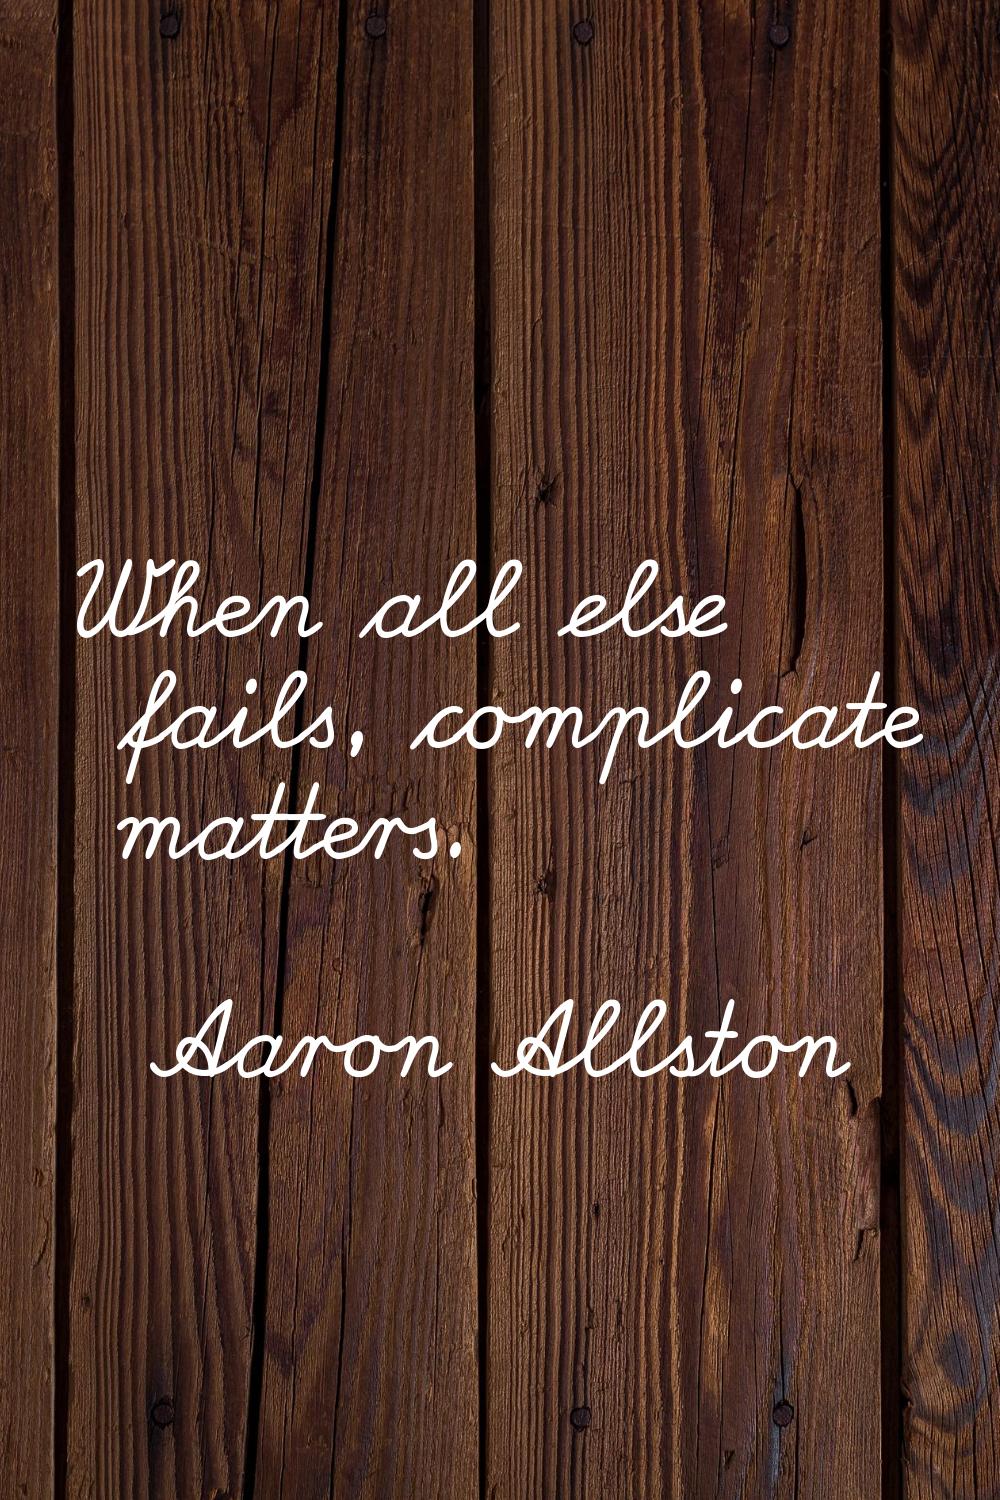 When all else fails, complicate matters.